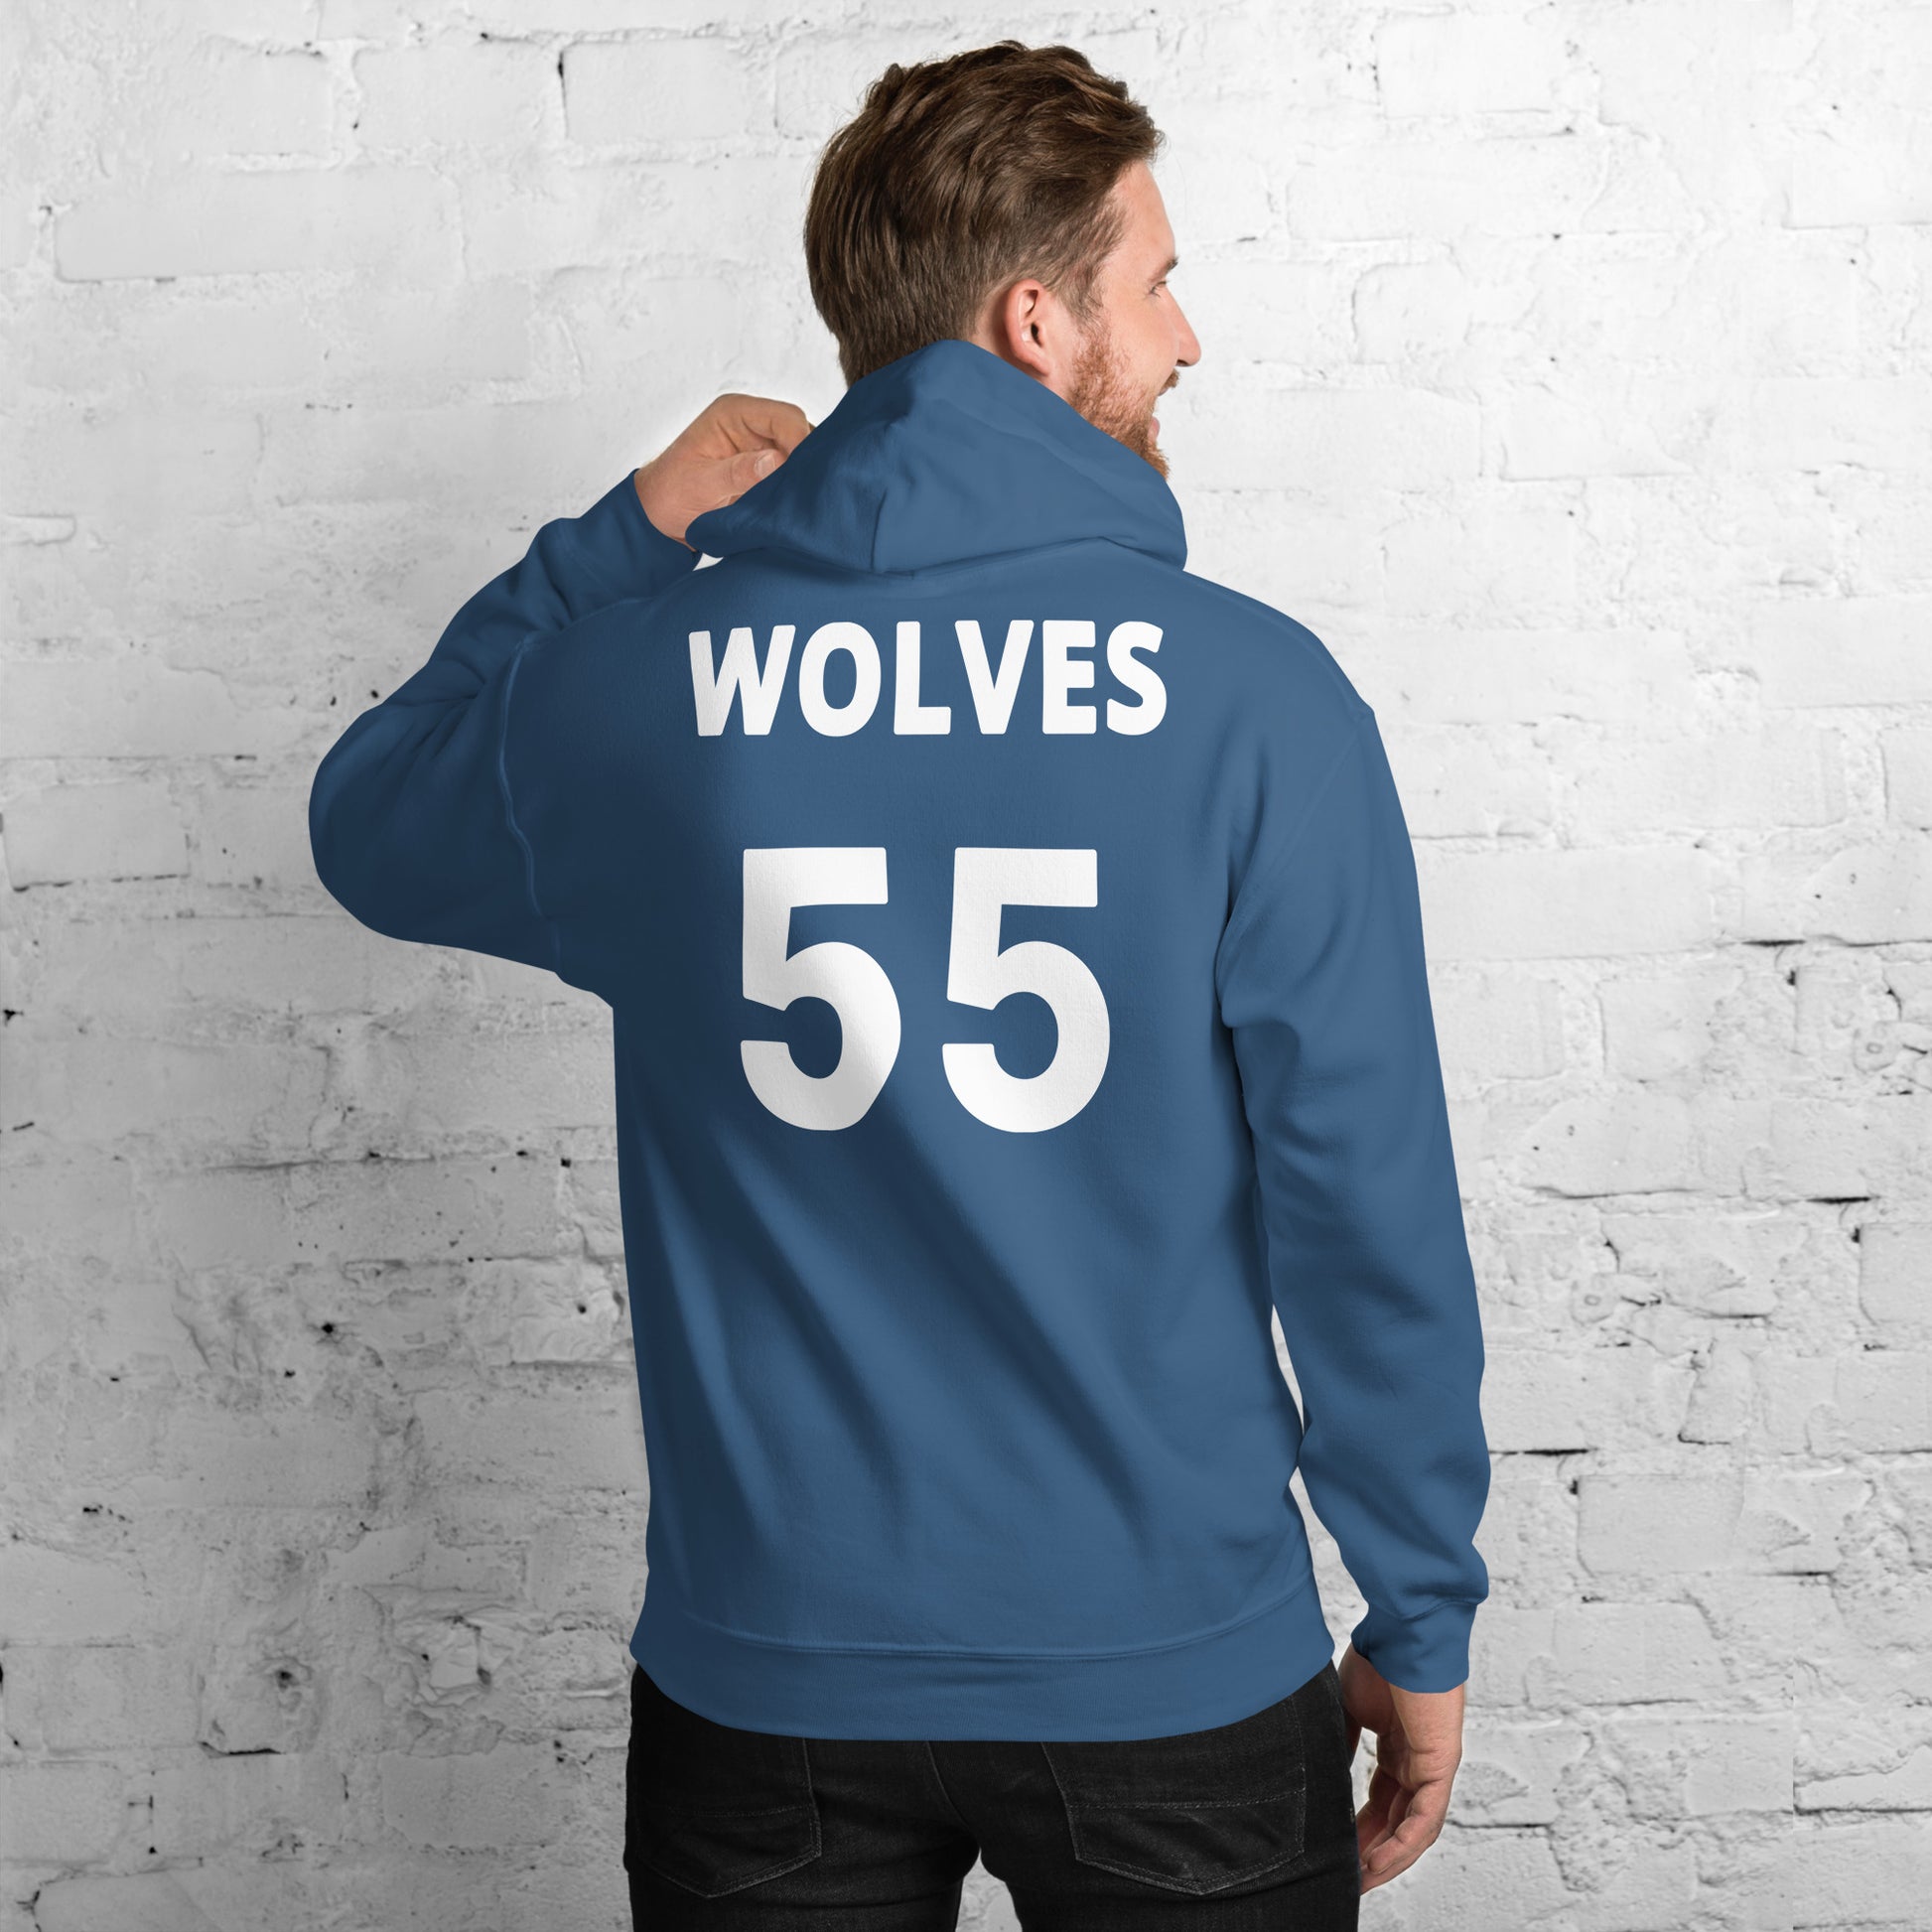 lowa woves - lowa - 55 - hoodies for men - men tshirts - shirts - basketball - sport - fitness